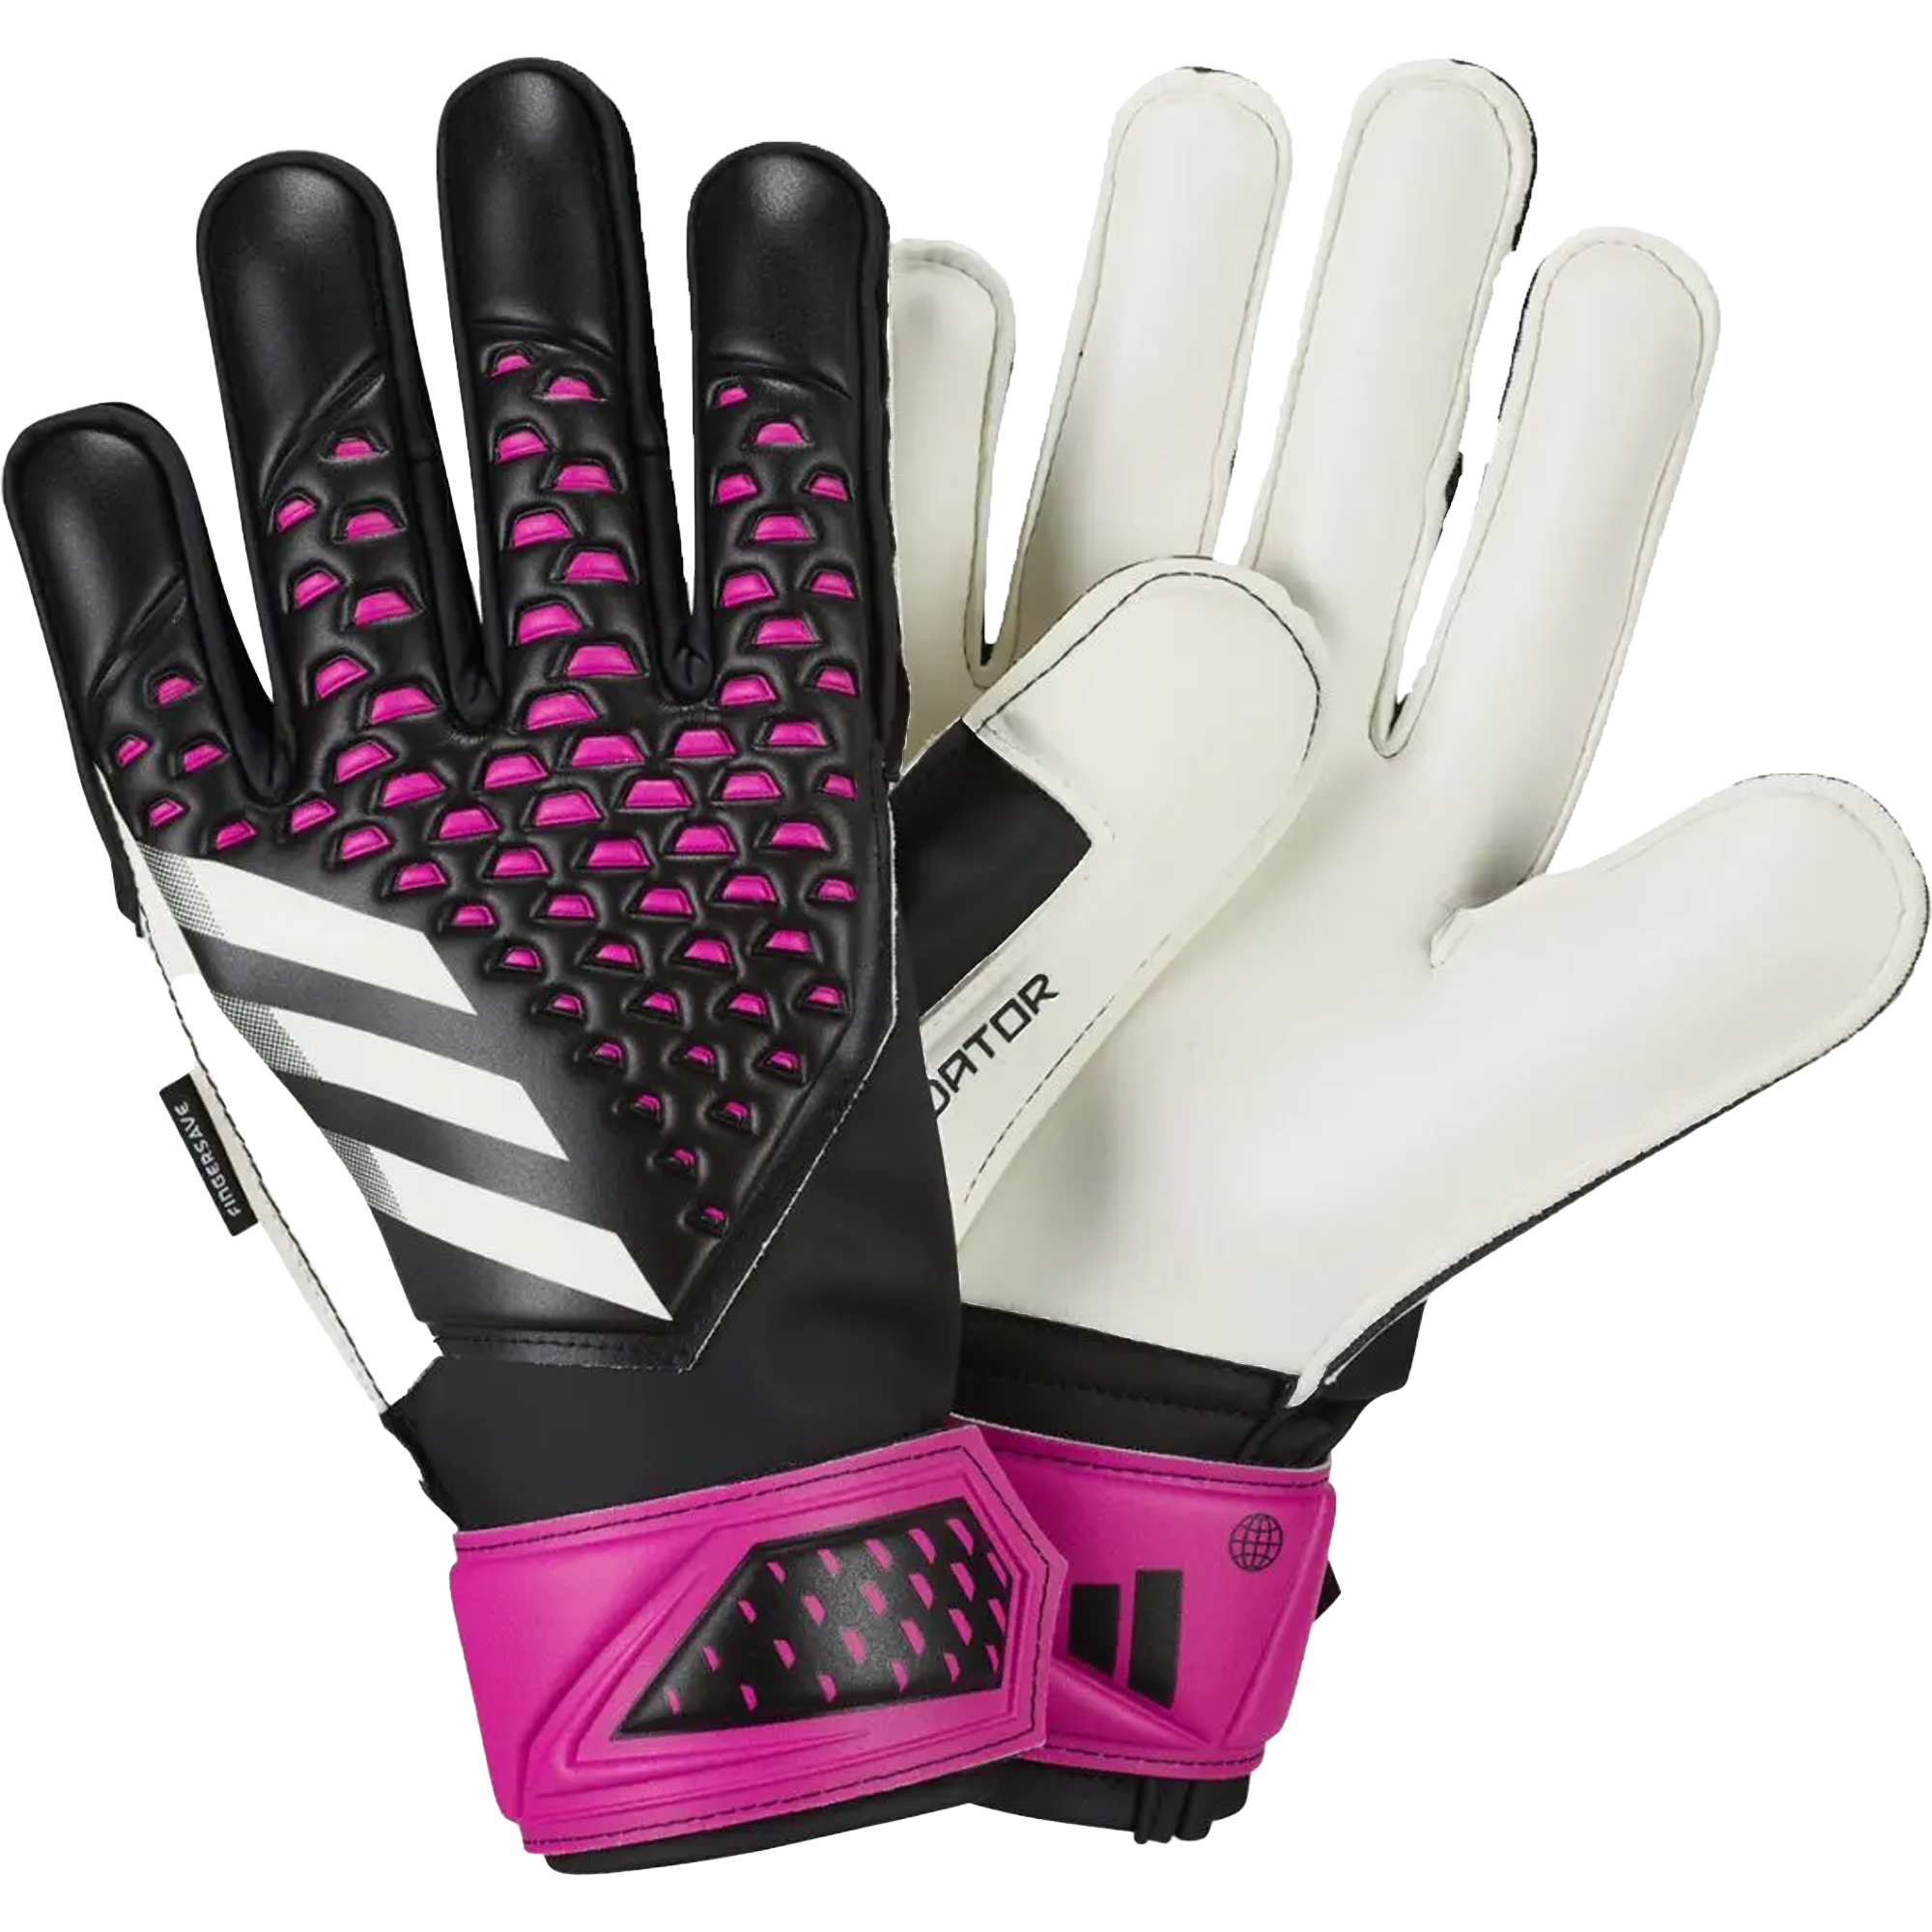 Adidas Predator Pro Youth Goalkeeper Gloves 7